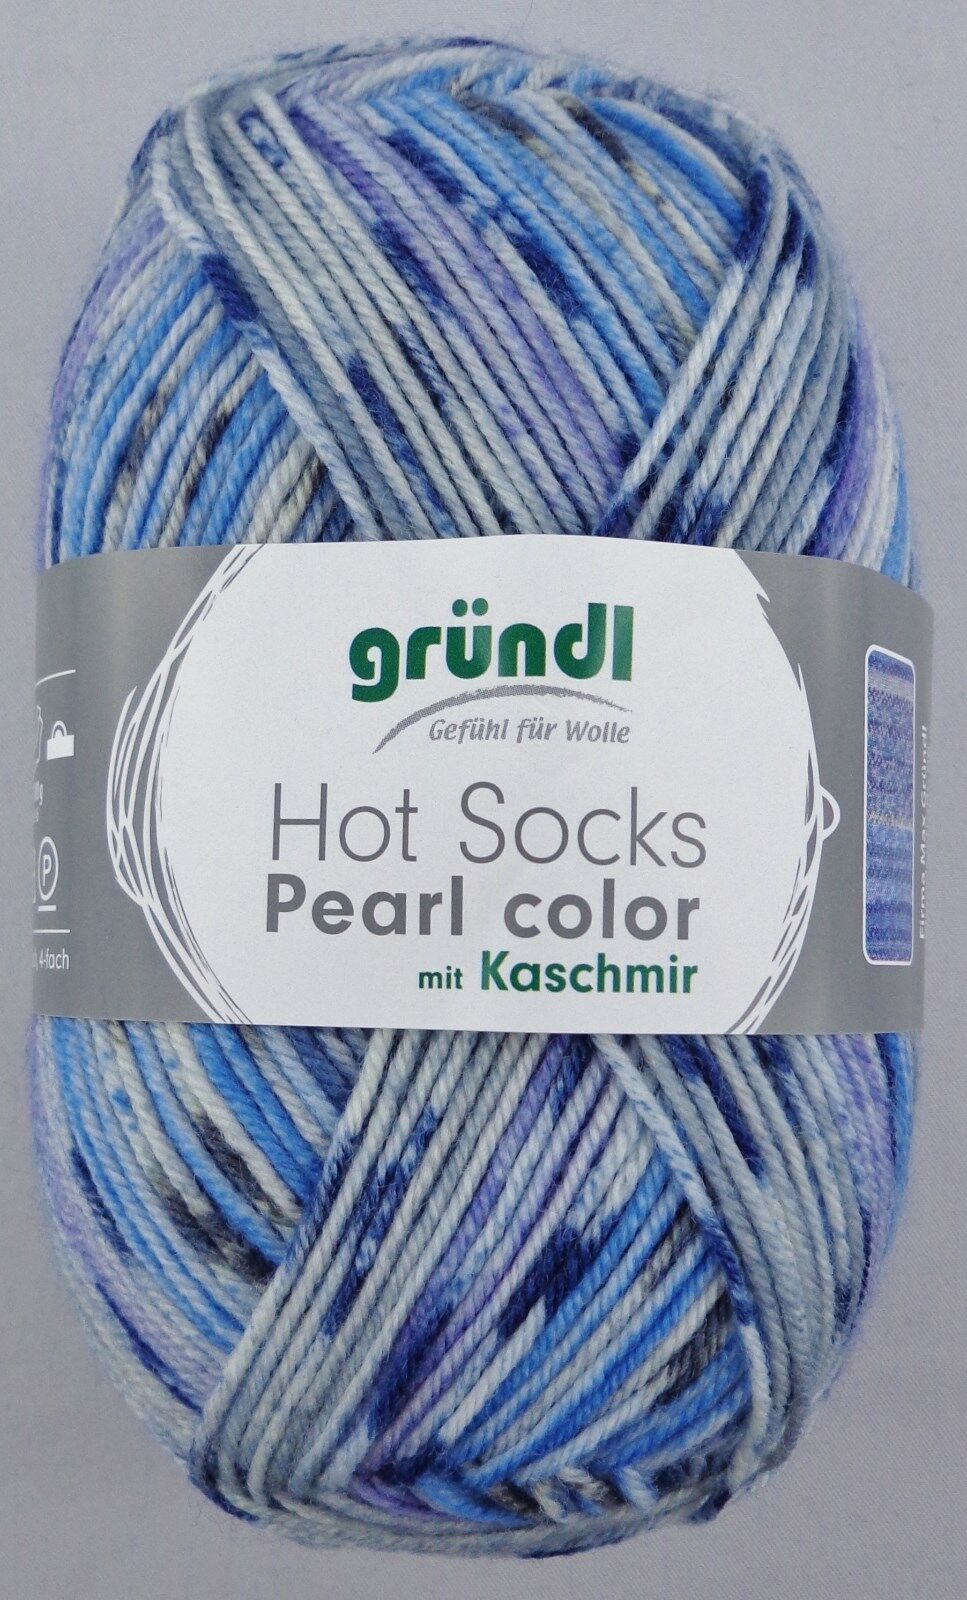 Gründl Hot Socks Pearl Color mit Kaschmir, 50g Sockenwolle 4-fach